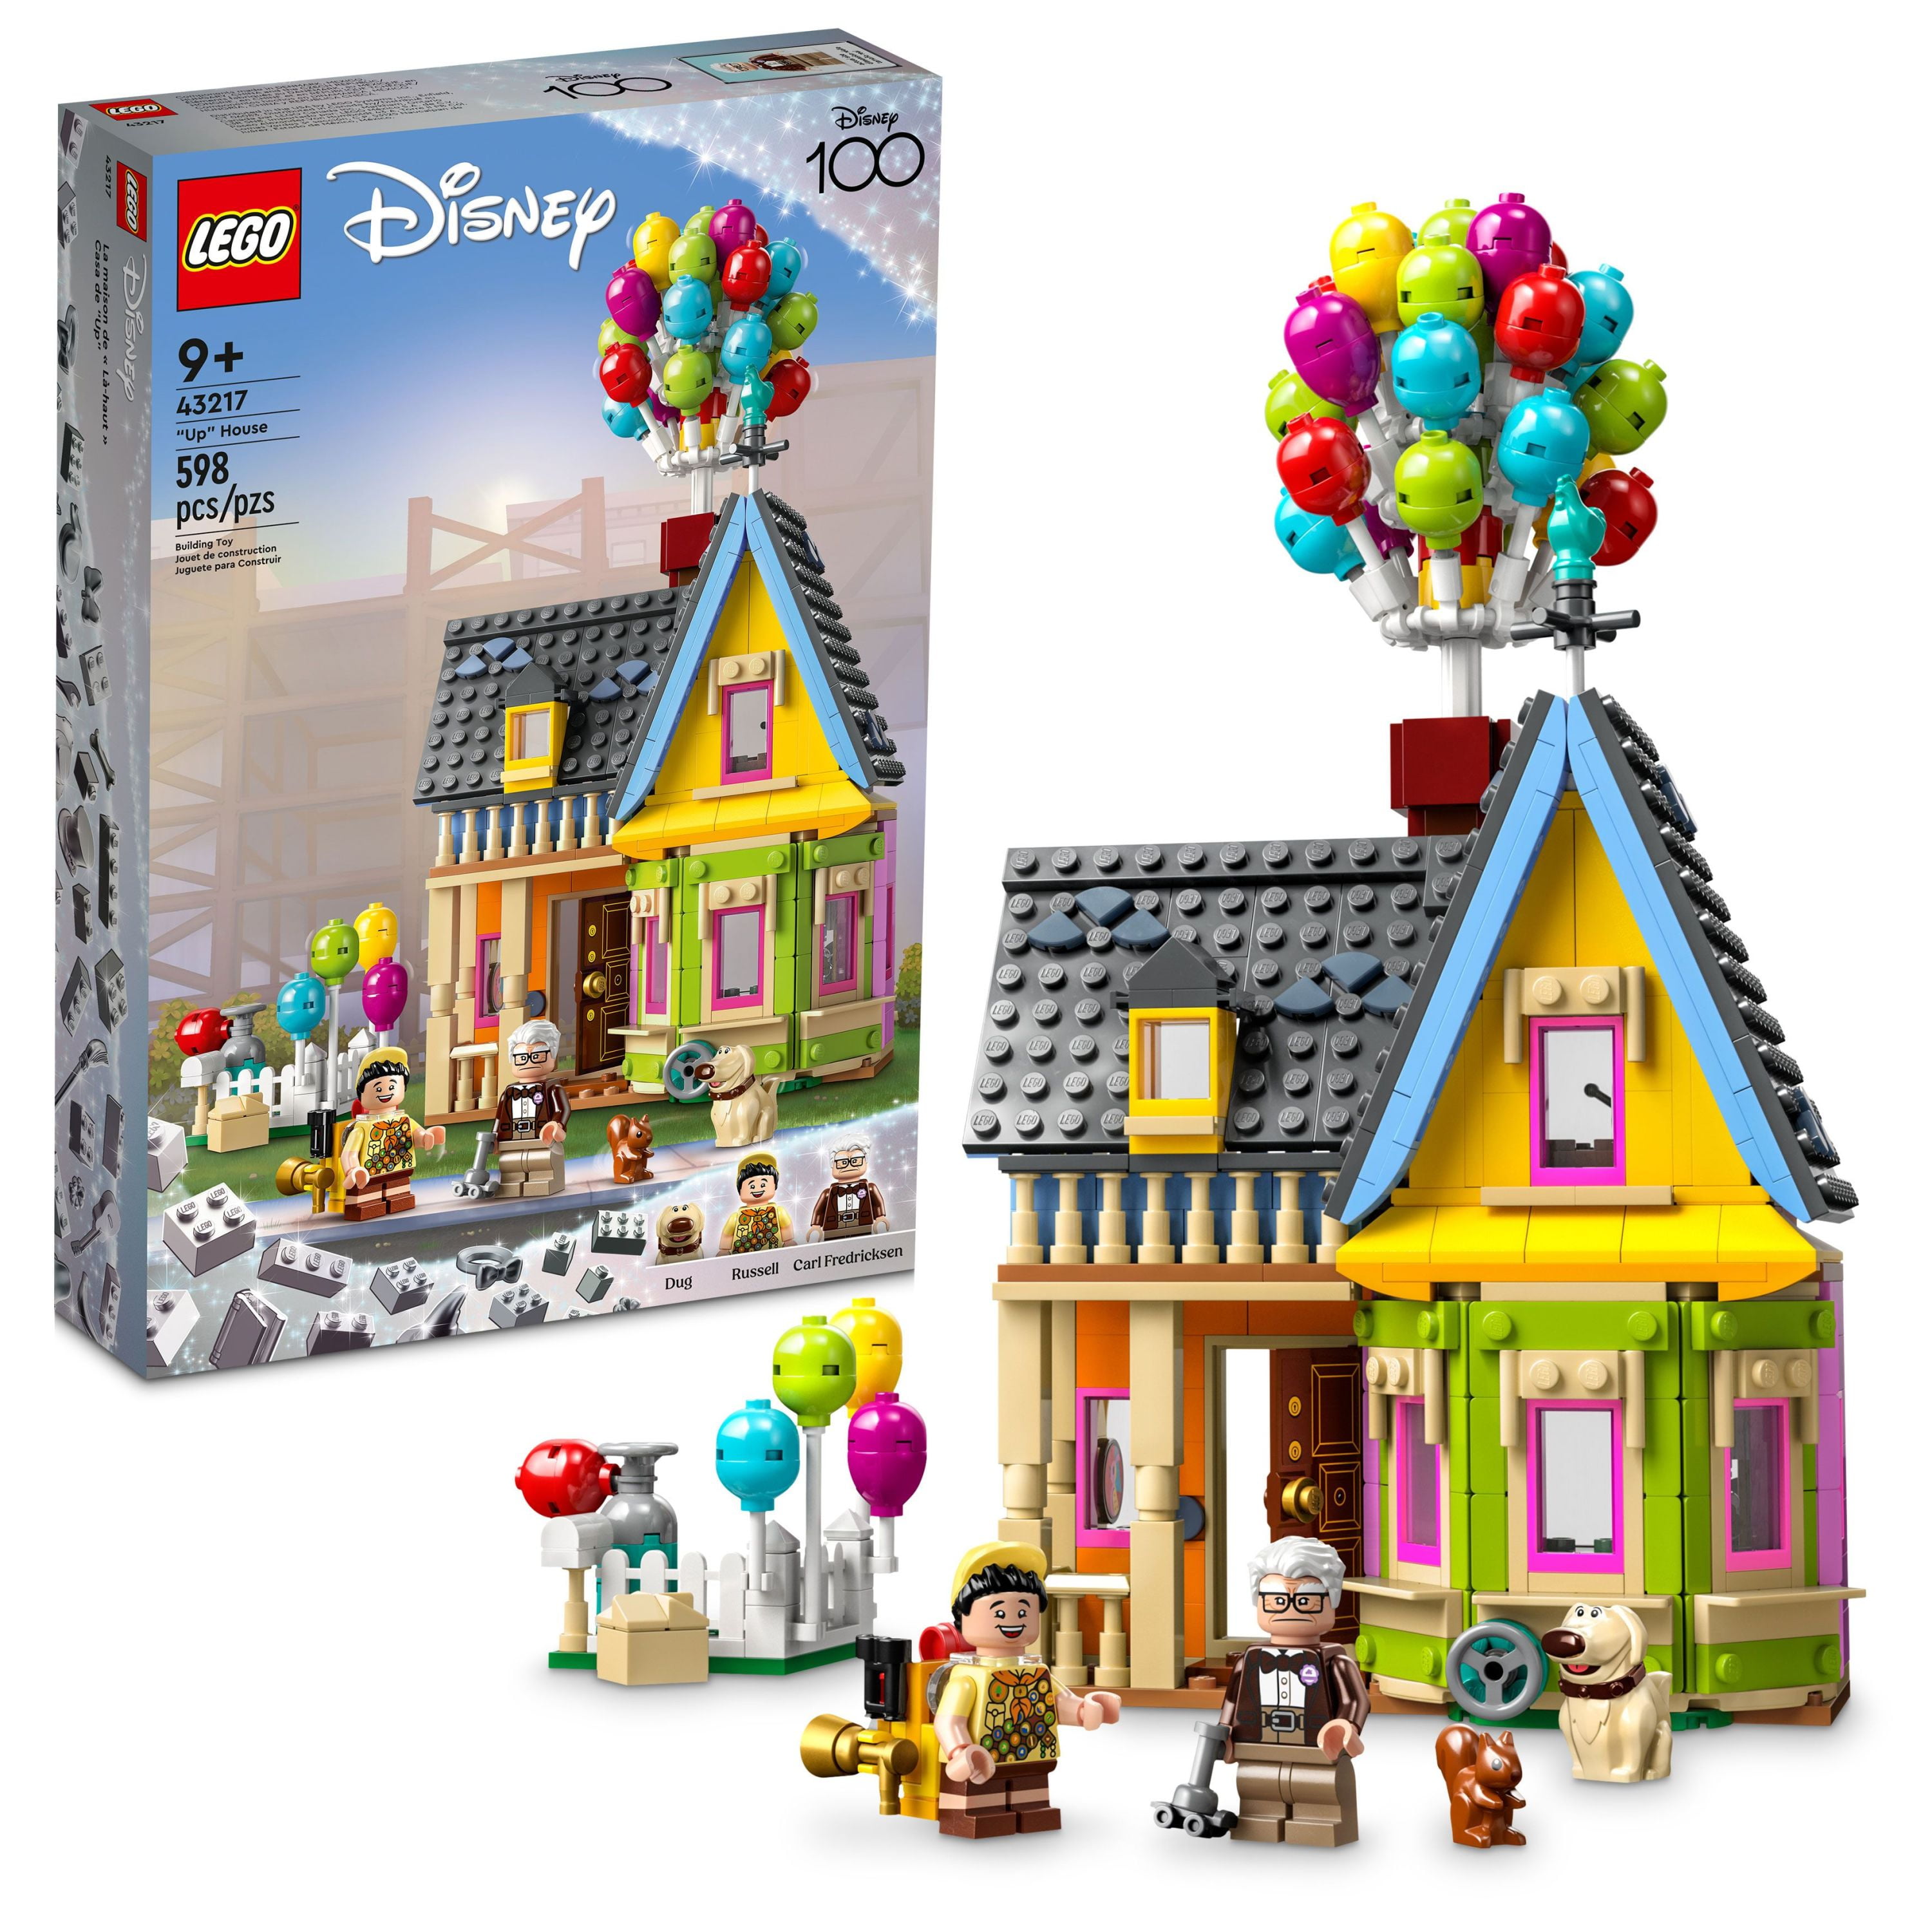 LEGO Disney Encanto the Madrigal House 43202 Multicolor Building Kit